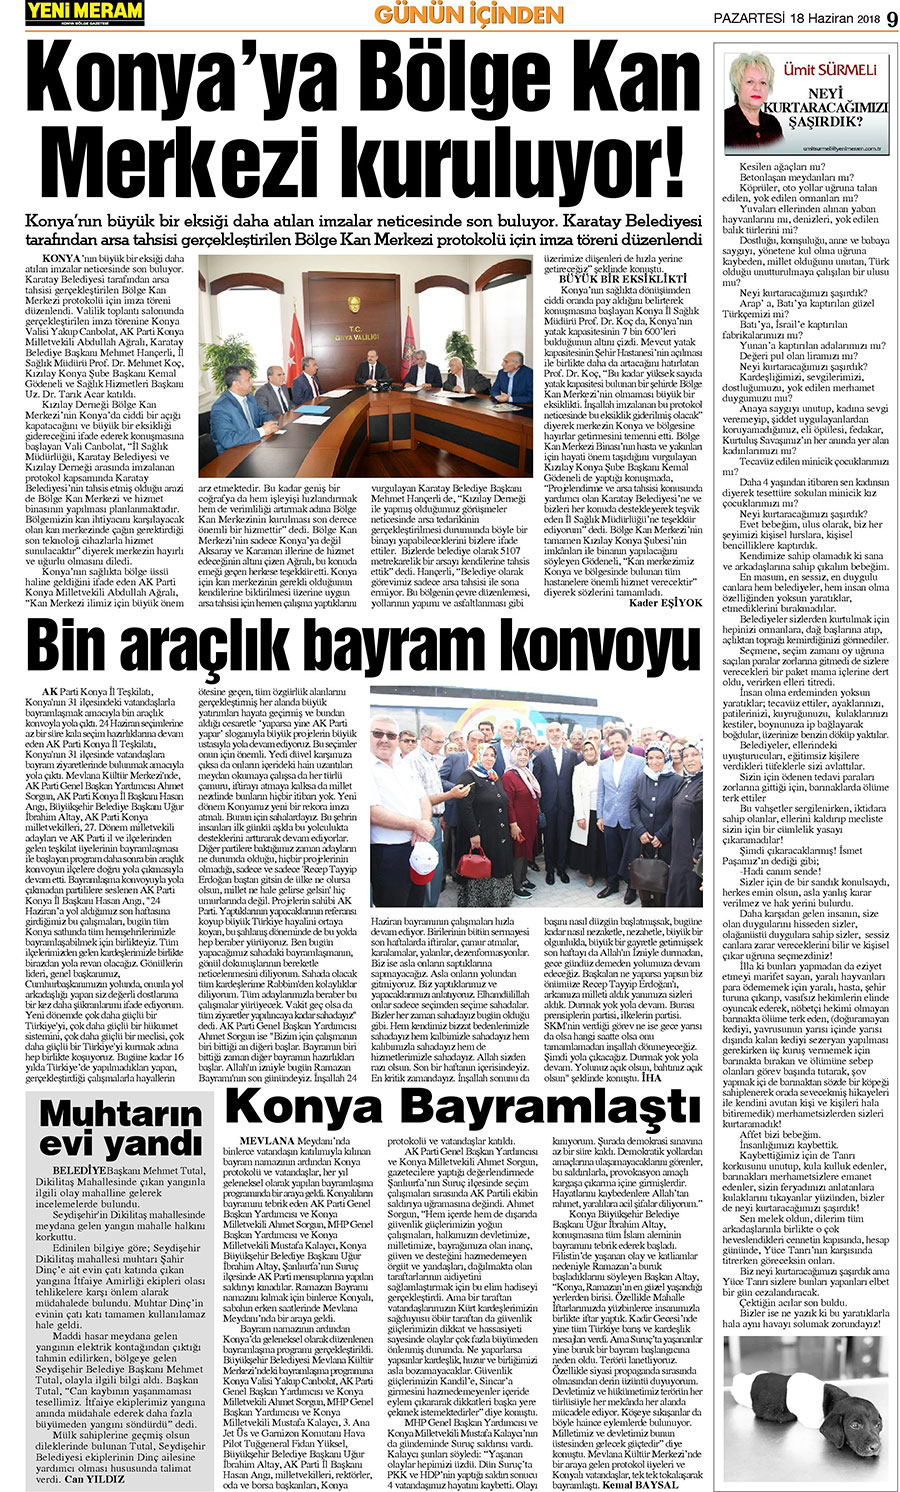 18 Haziran 2018 Yeni Meram Gazetesi